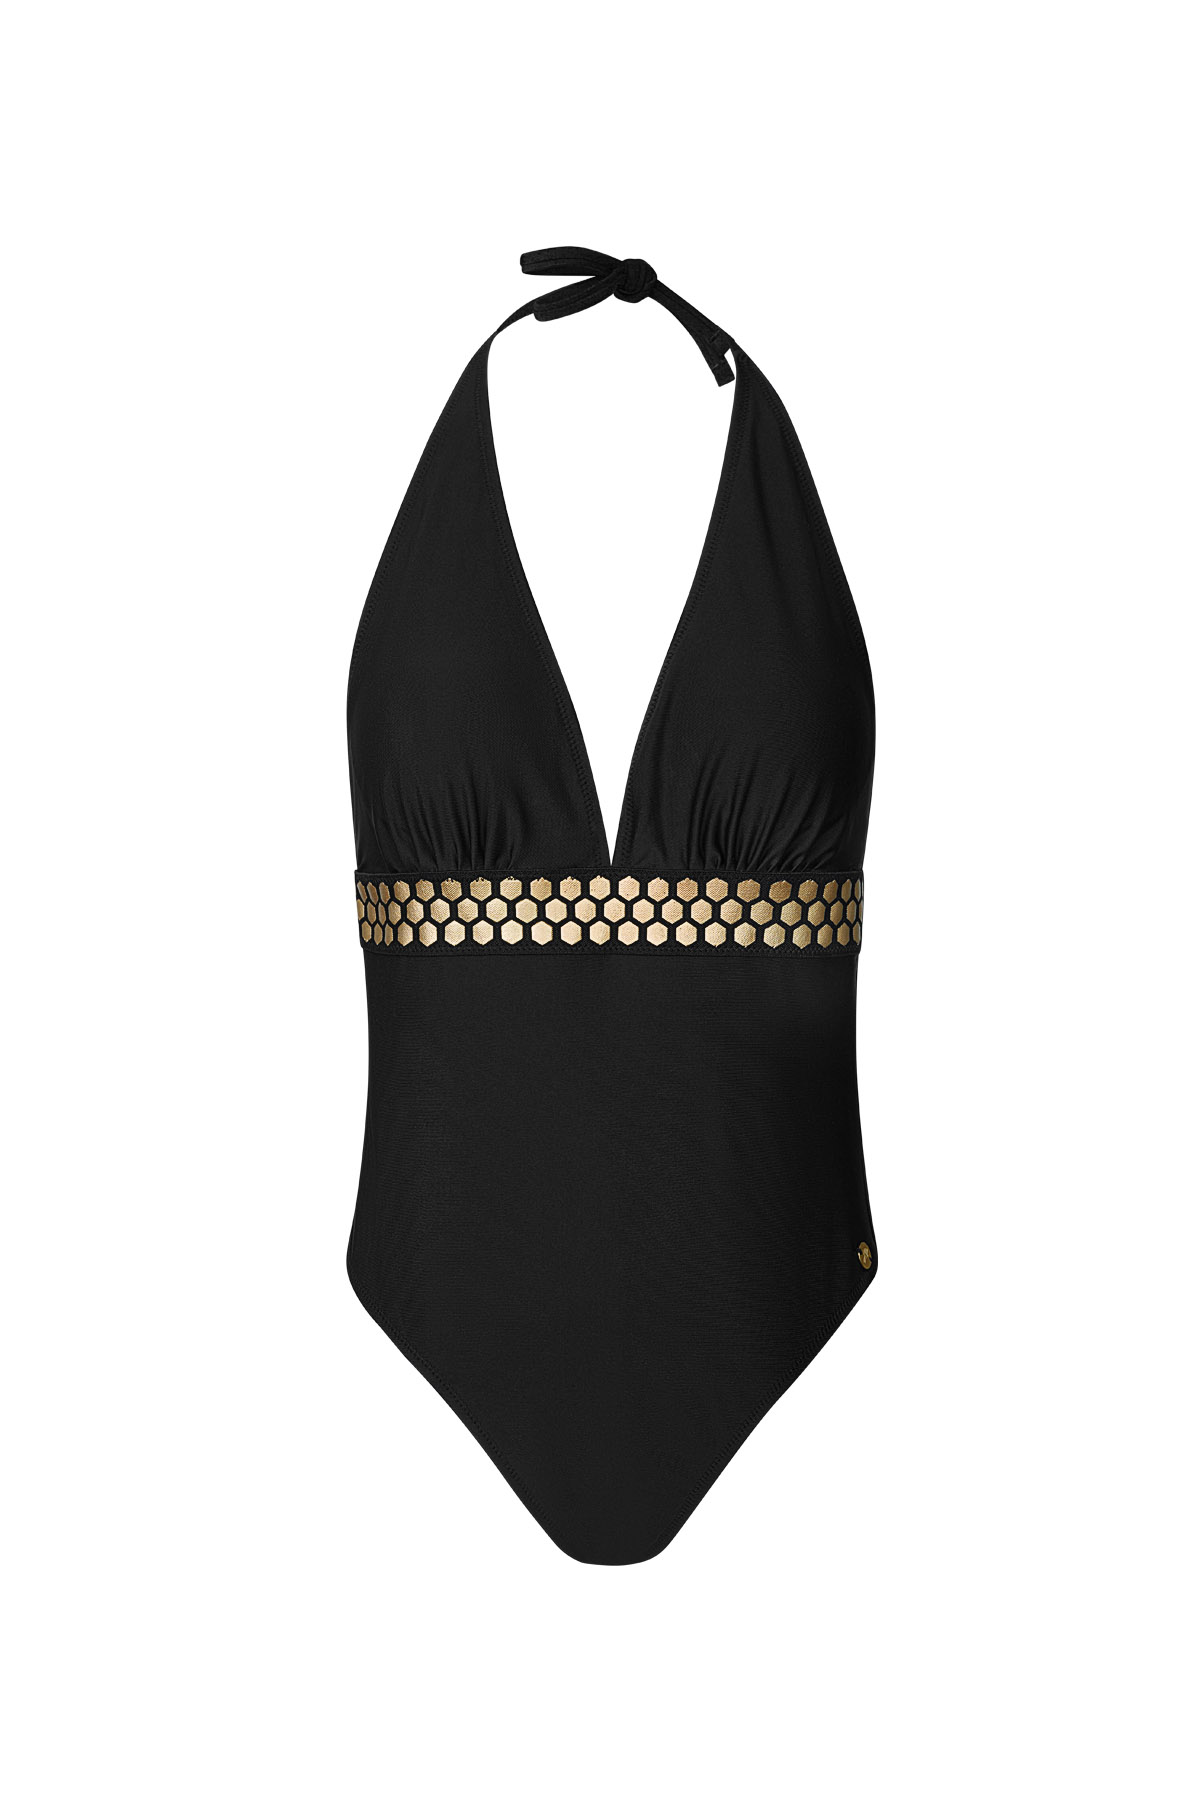 Honeycomb detail swimsuit - black S h5 